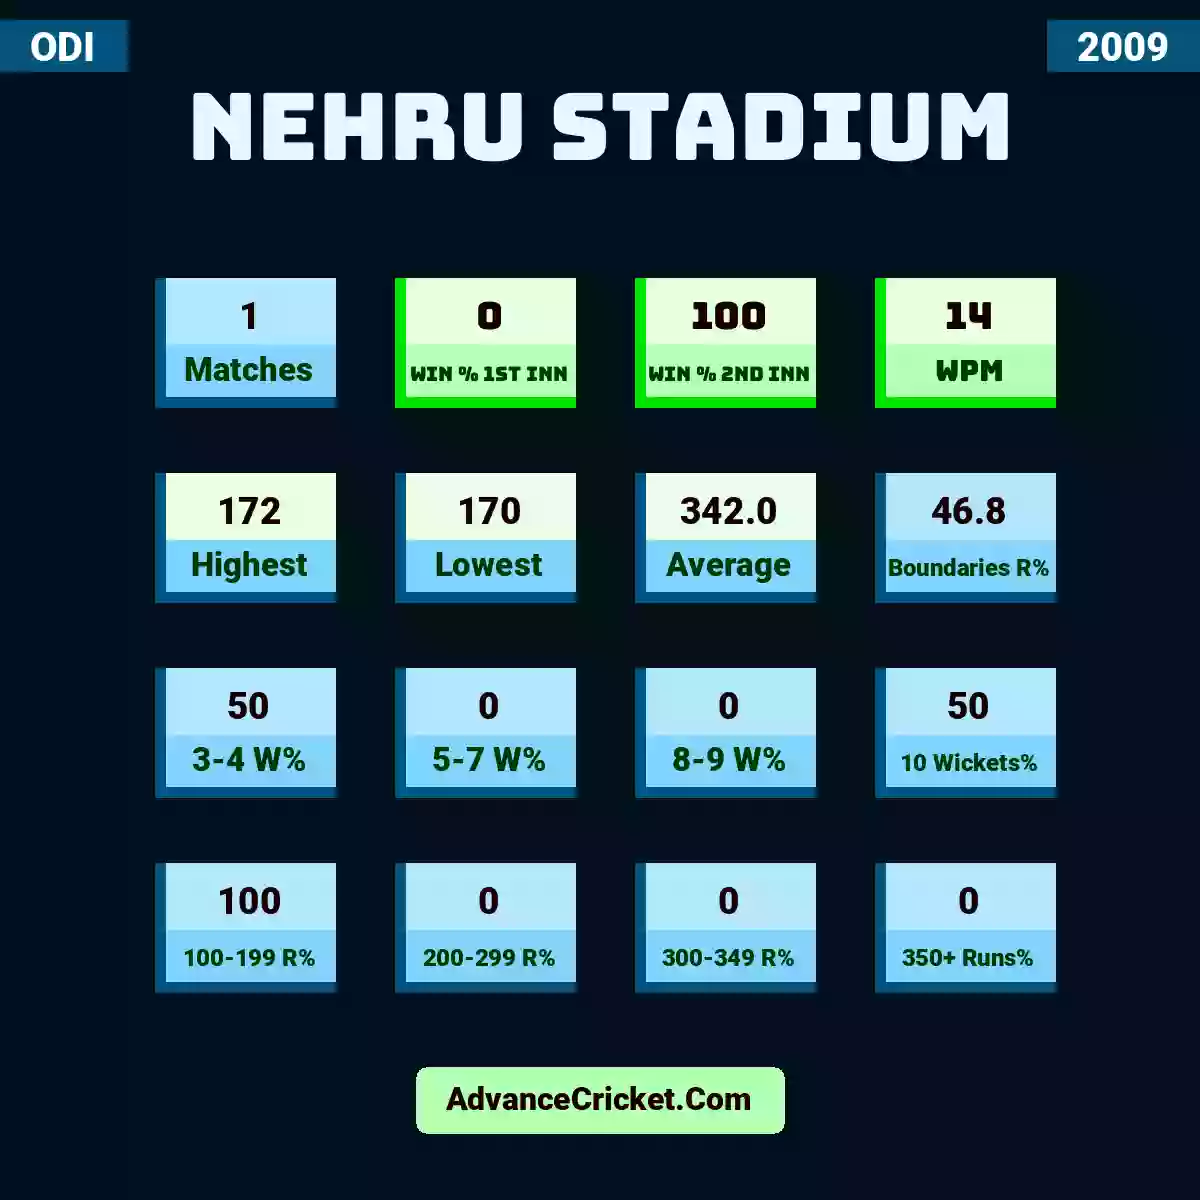 Image showing Nehru Stadium with Matches: 1, Win % 1st Inn: 0, Win % 2nd Inn: 100, WPM: 14, Highest: 172, Lowest: 170, Average: 342.0, Boundaries R%: 46.8, 3-4 W%: 50, 5-7 W%: 0, 8-9 W%: 0, 10 Wickets%: 50, 100-199 R%: 100, 200-299 R%: 0, 300-349 R%: 0, 350+ Runs%: 0.